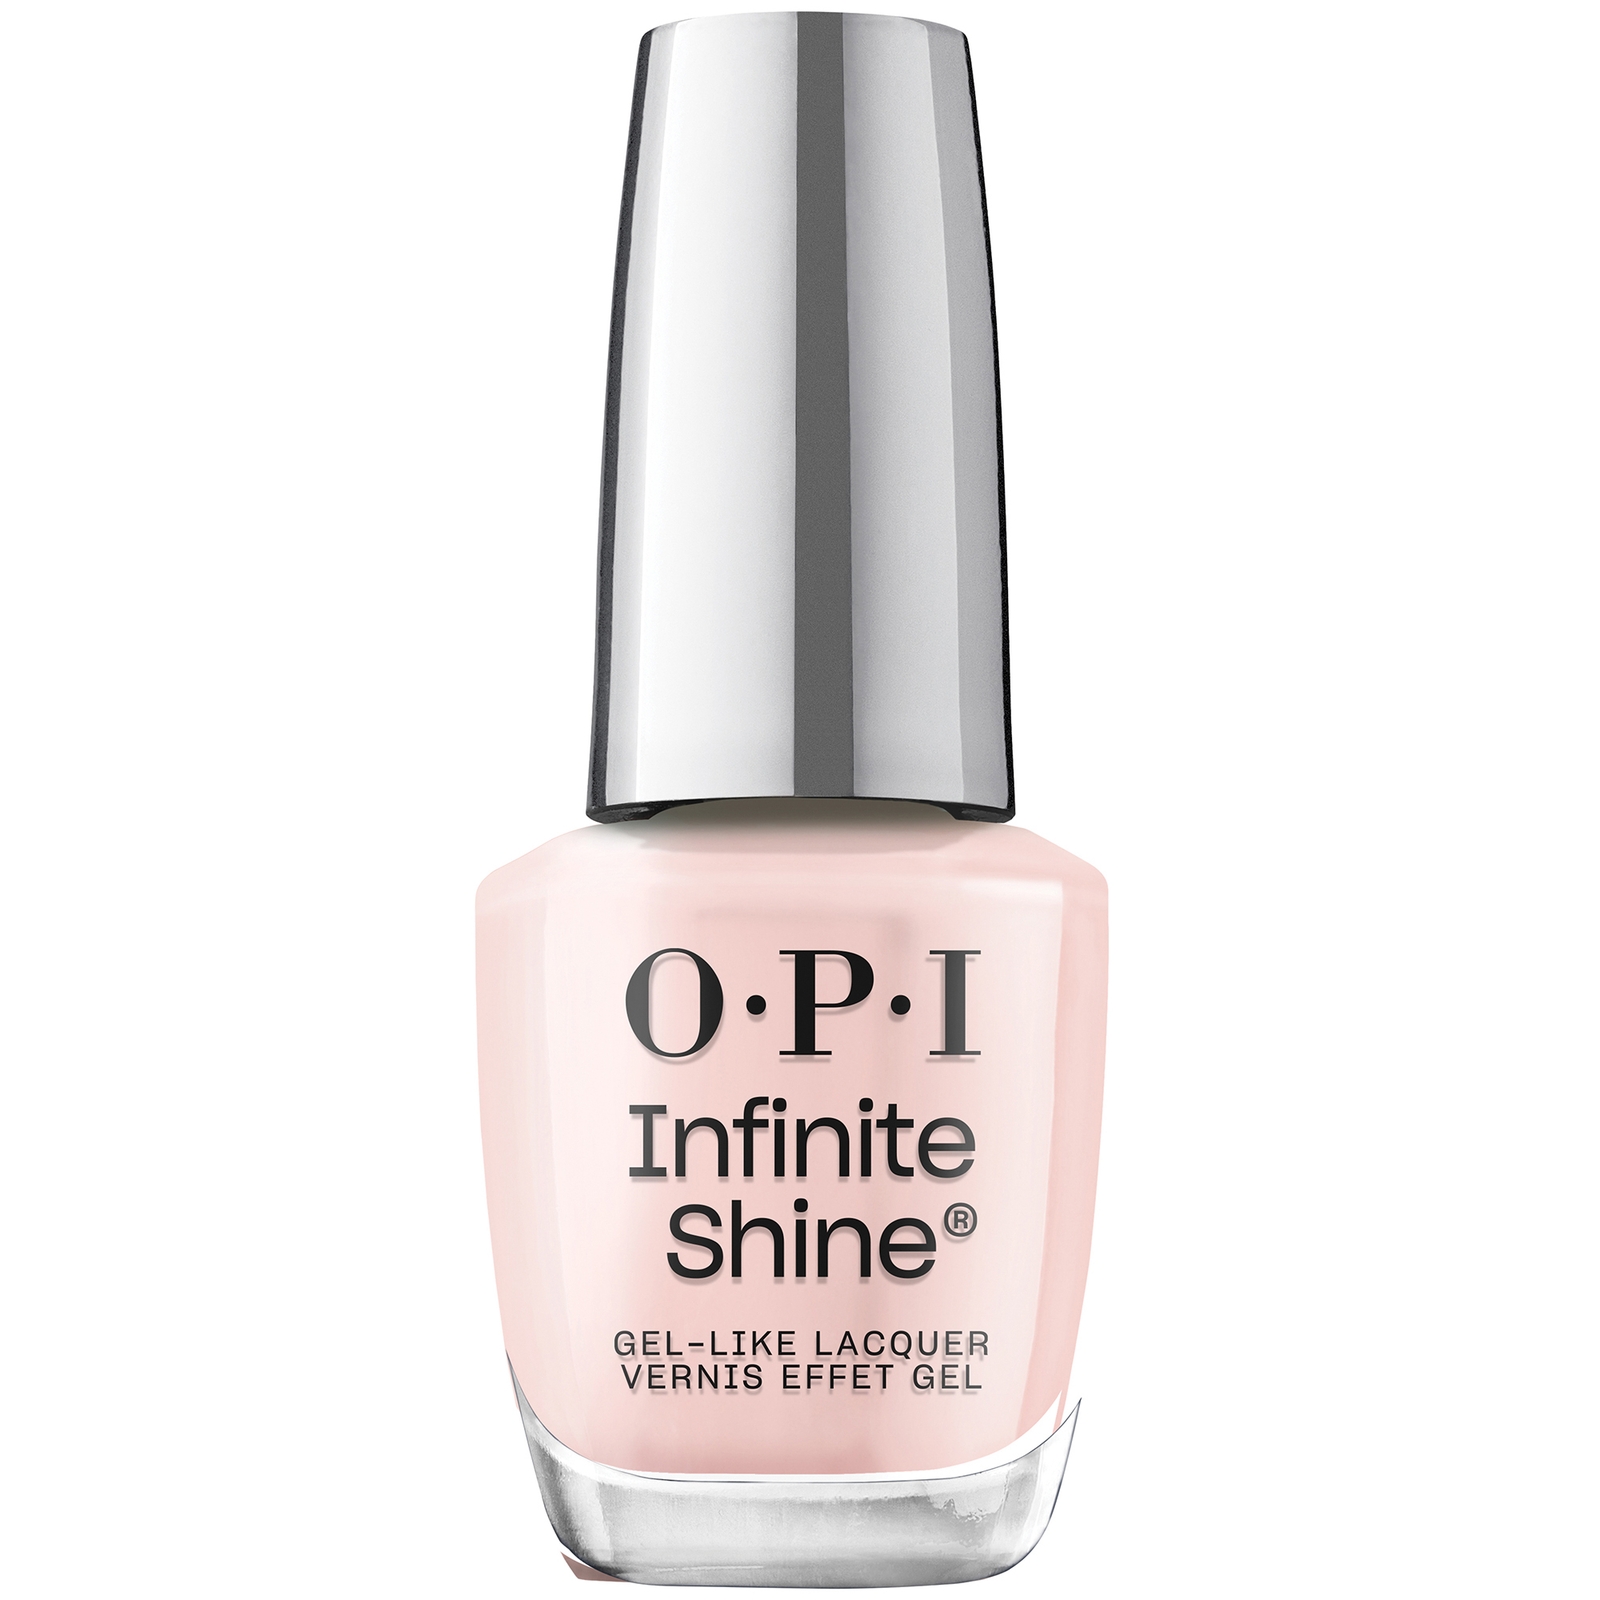 Opi Infinite Shine Long-wear Nail Polish - Passion 15ml In White